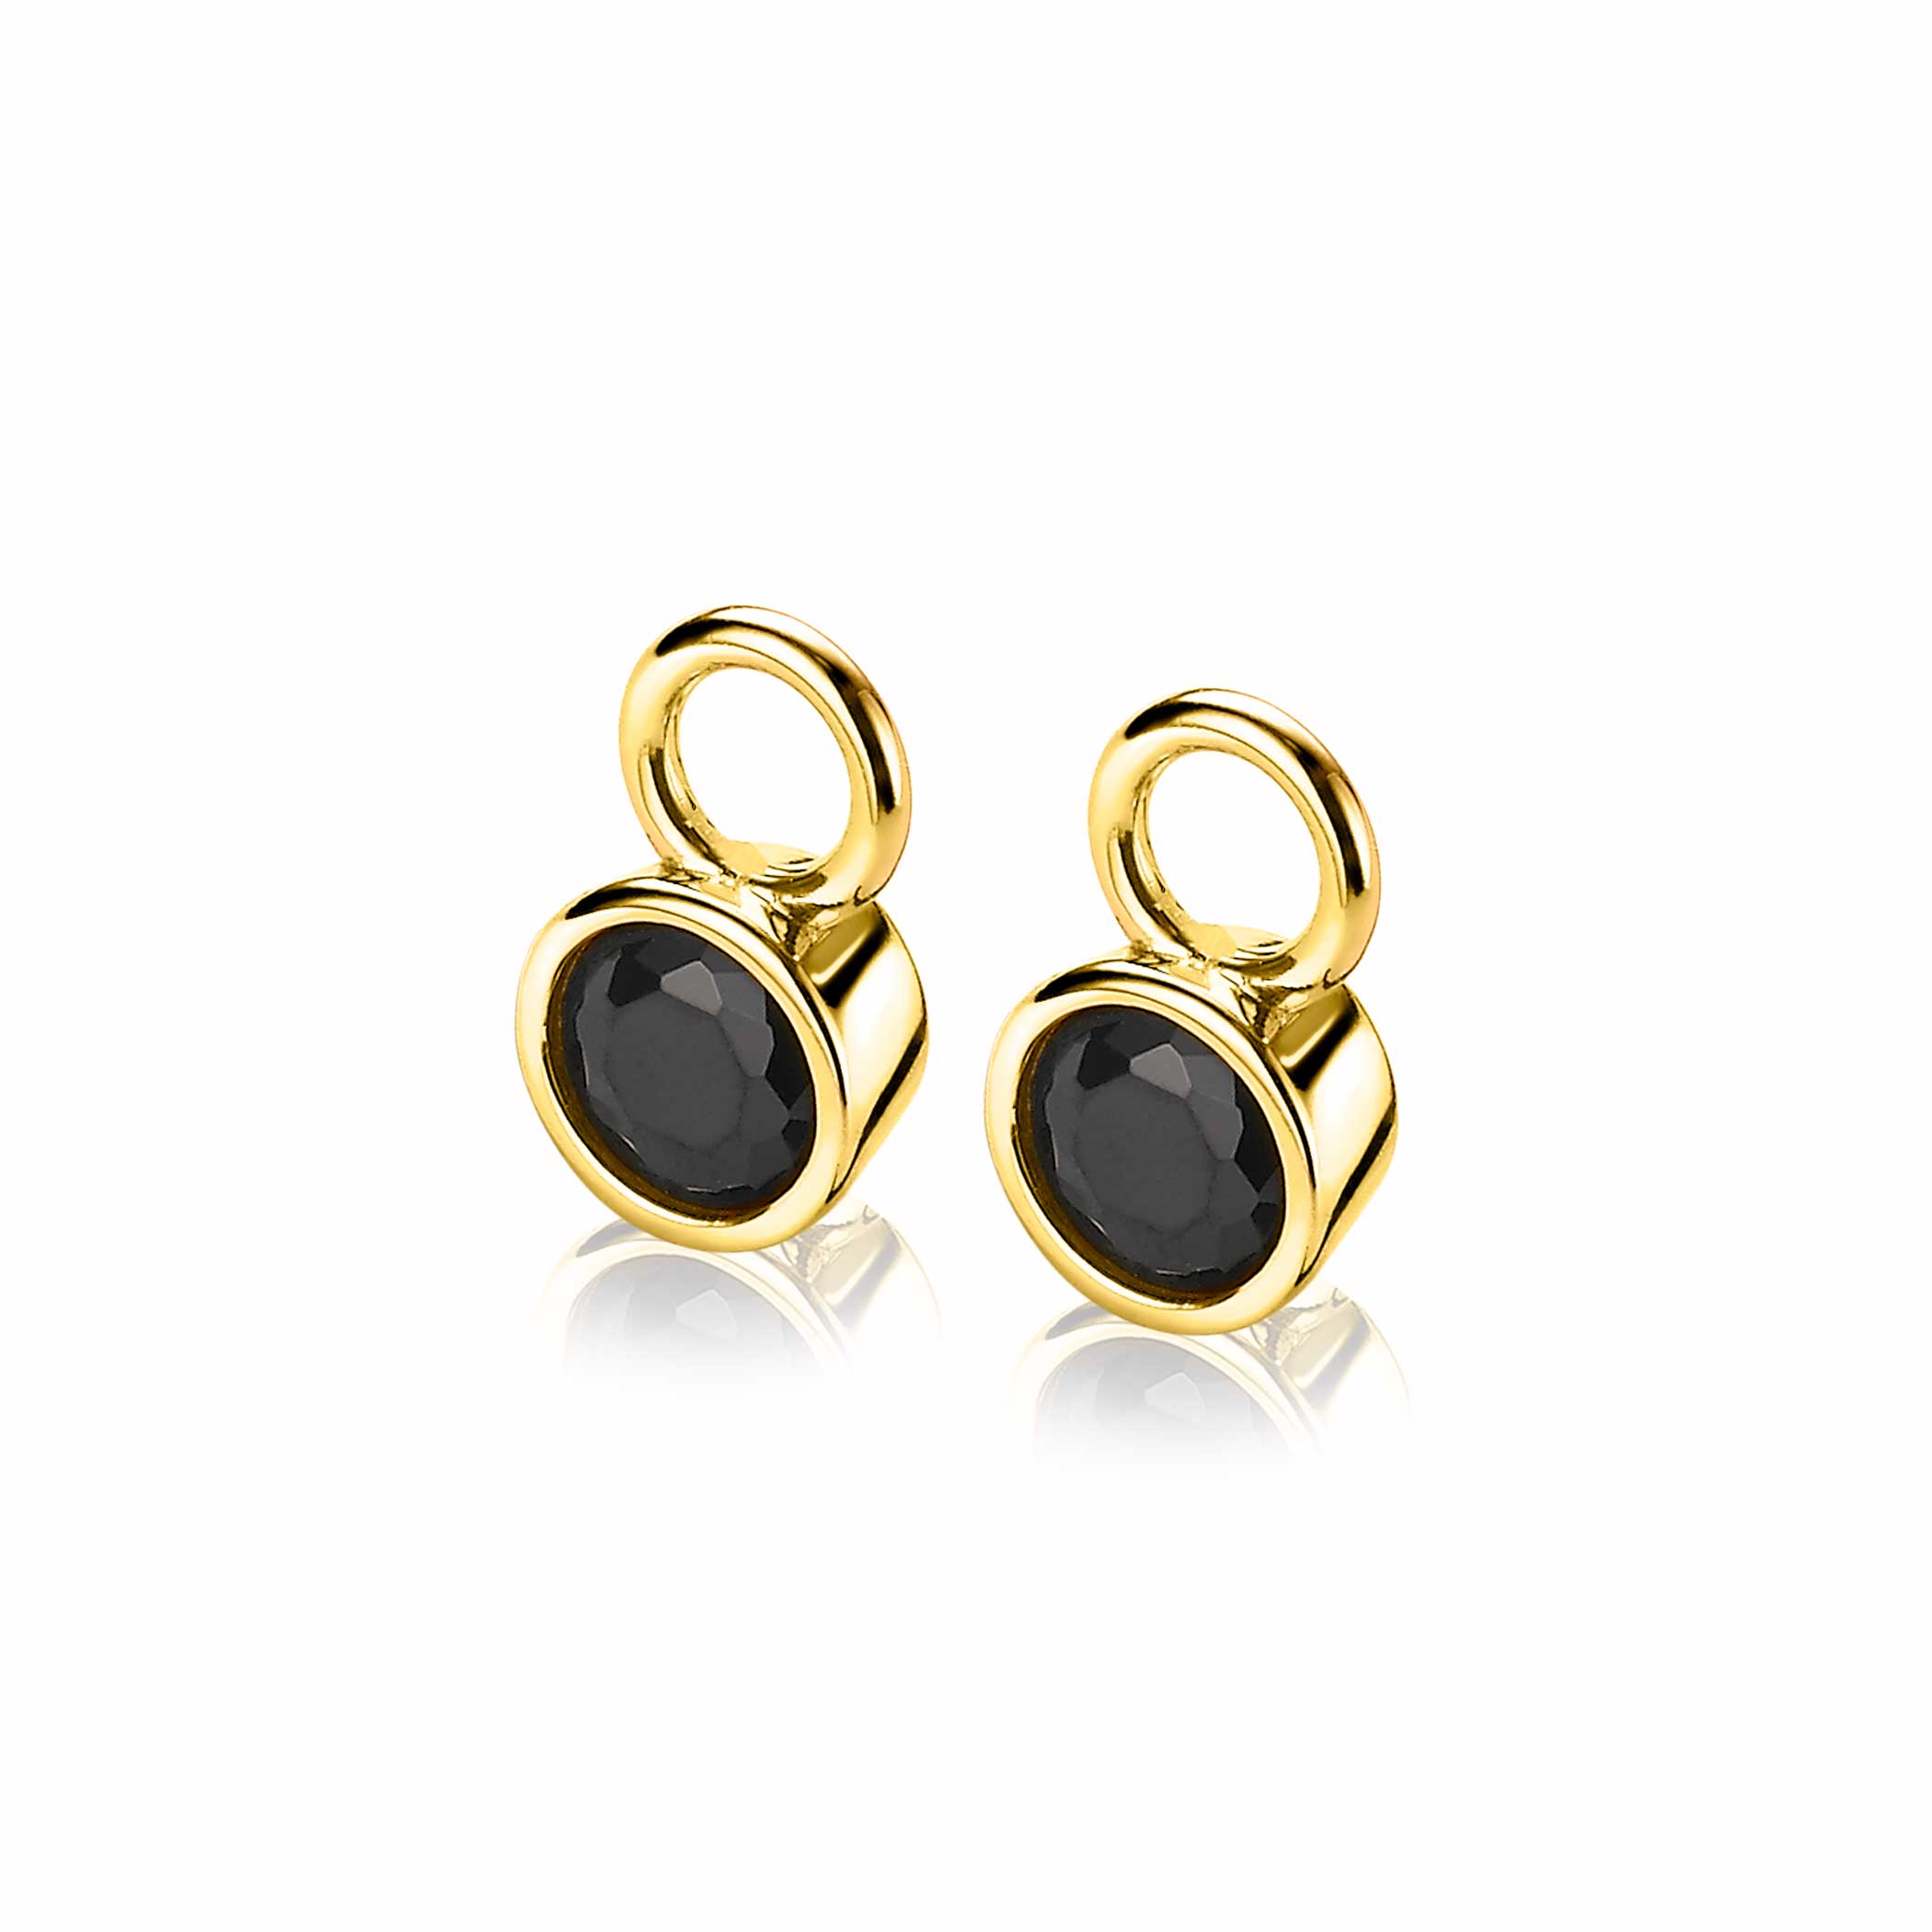 ZINZI Gold Plated Sterling Silver Earrings Pendants 7mm Round Black ZICH1486YZ (excl. hoop earrings)